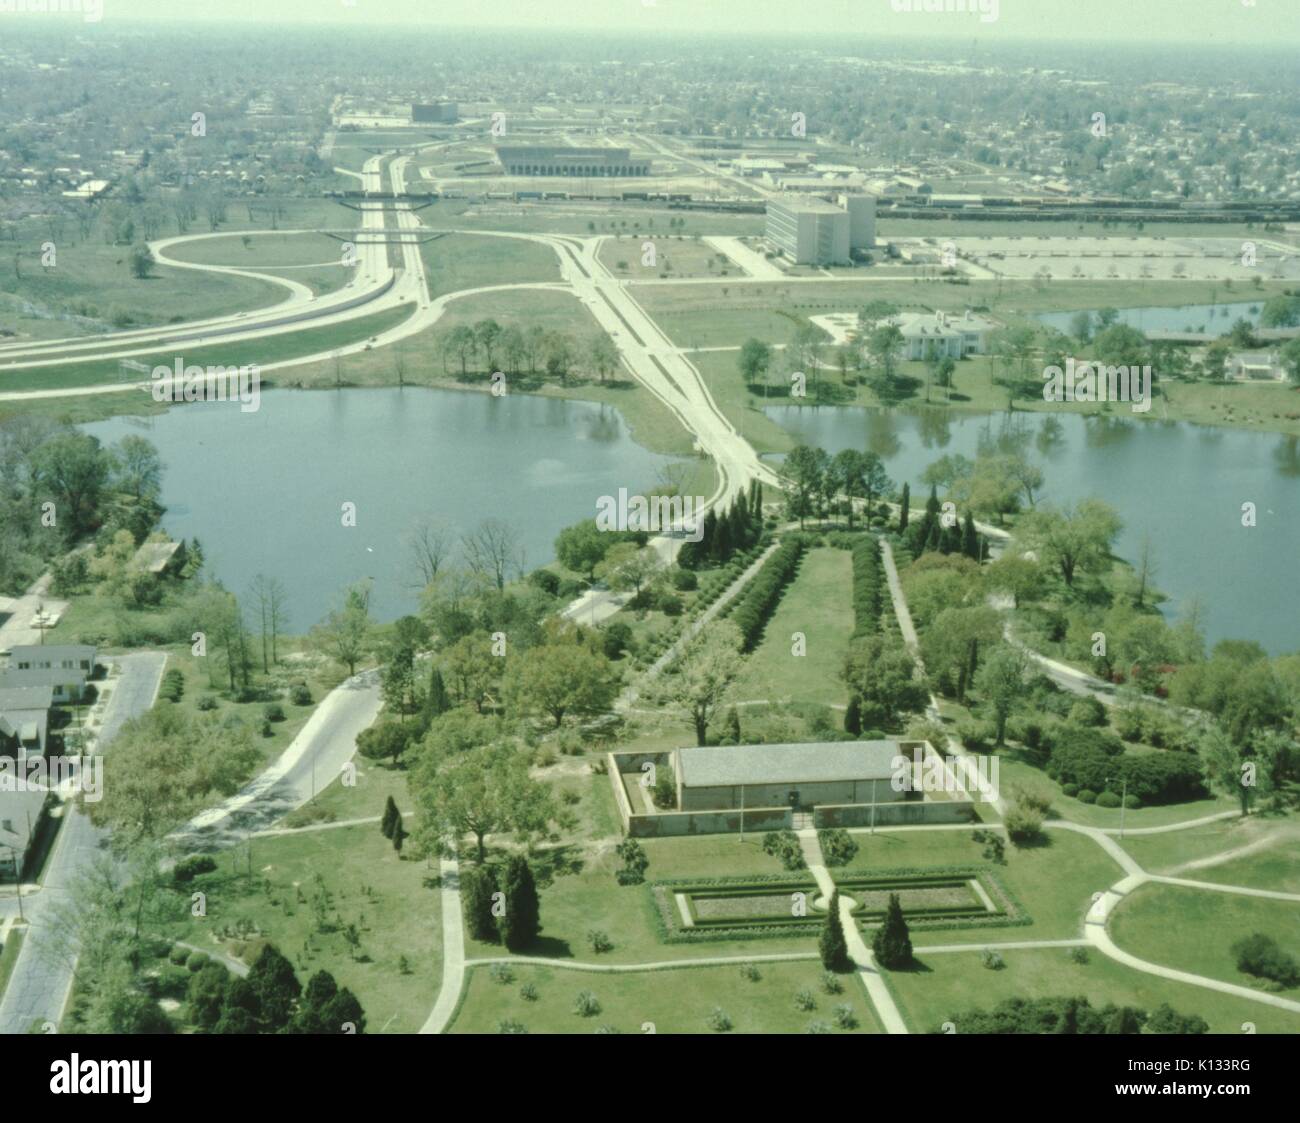 Aerial view of Louisiana capitol building looking East, Baton Rouge, Louisiana, 1967. Stock Photo